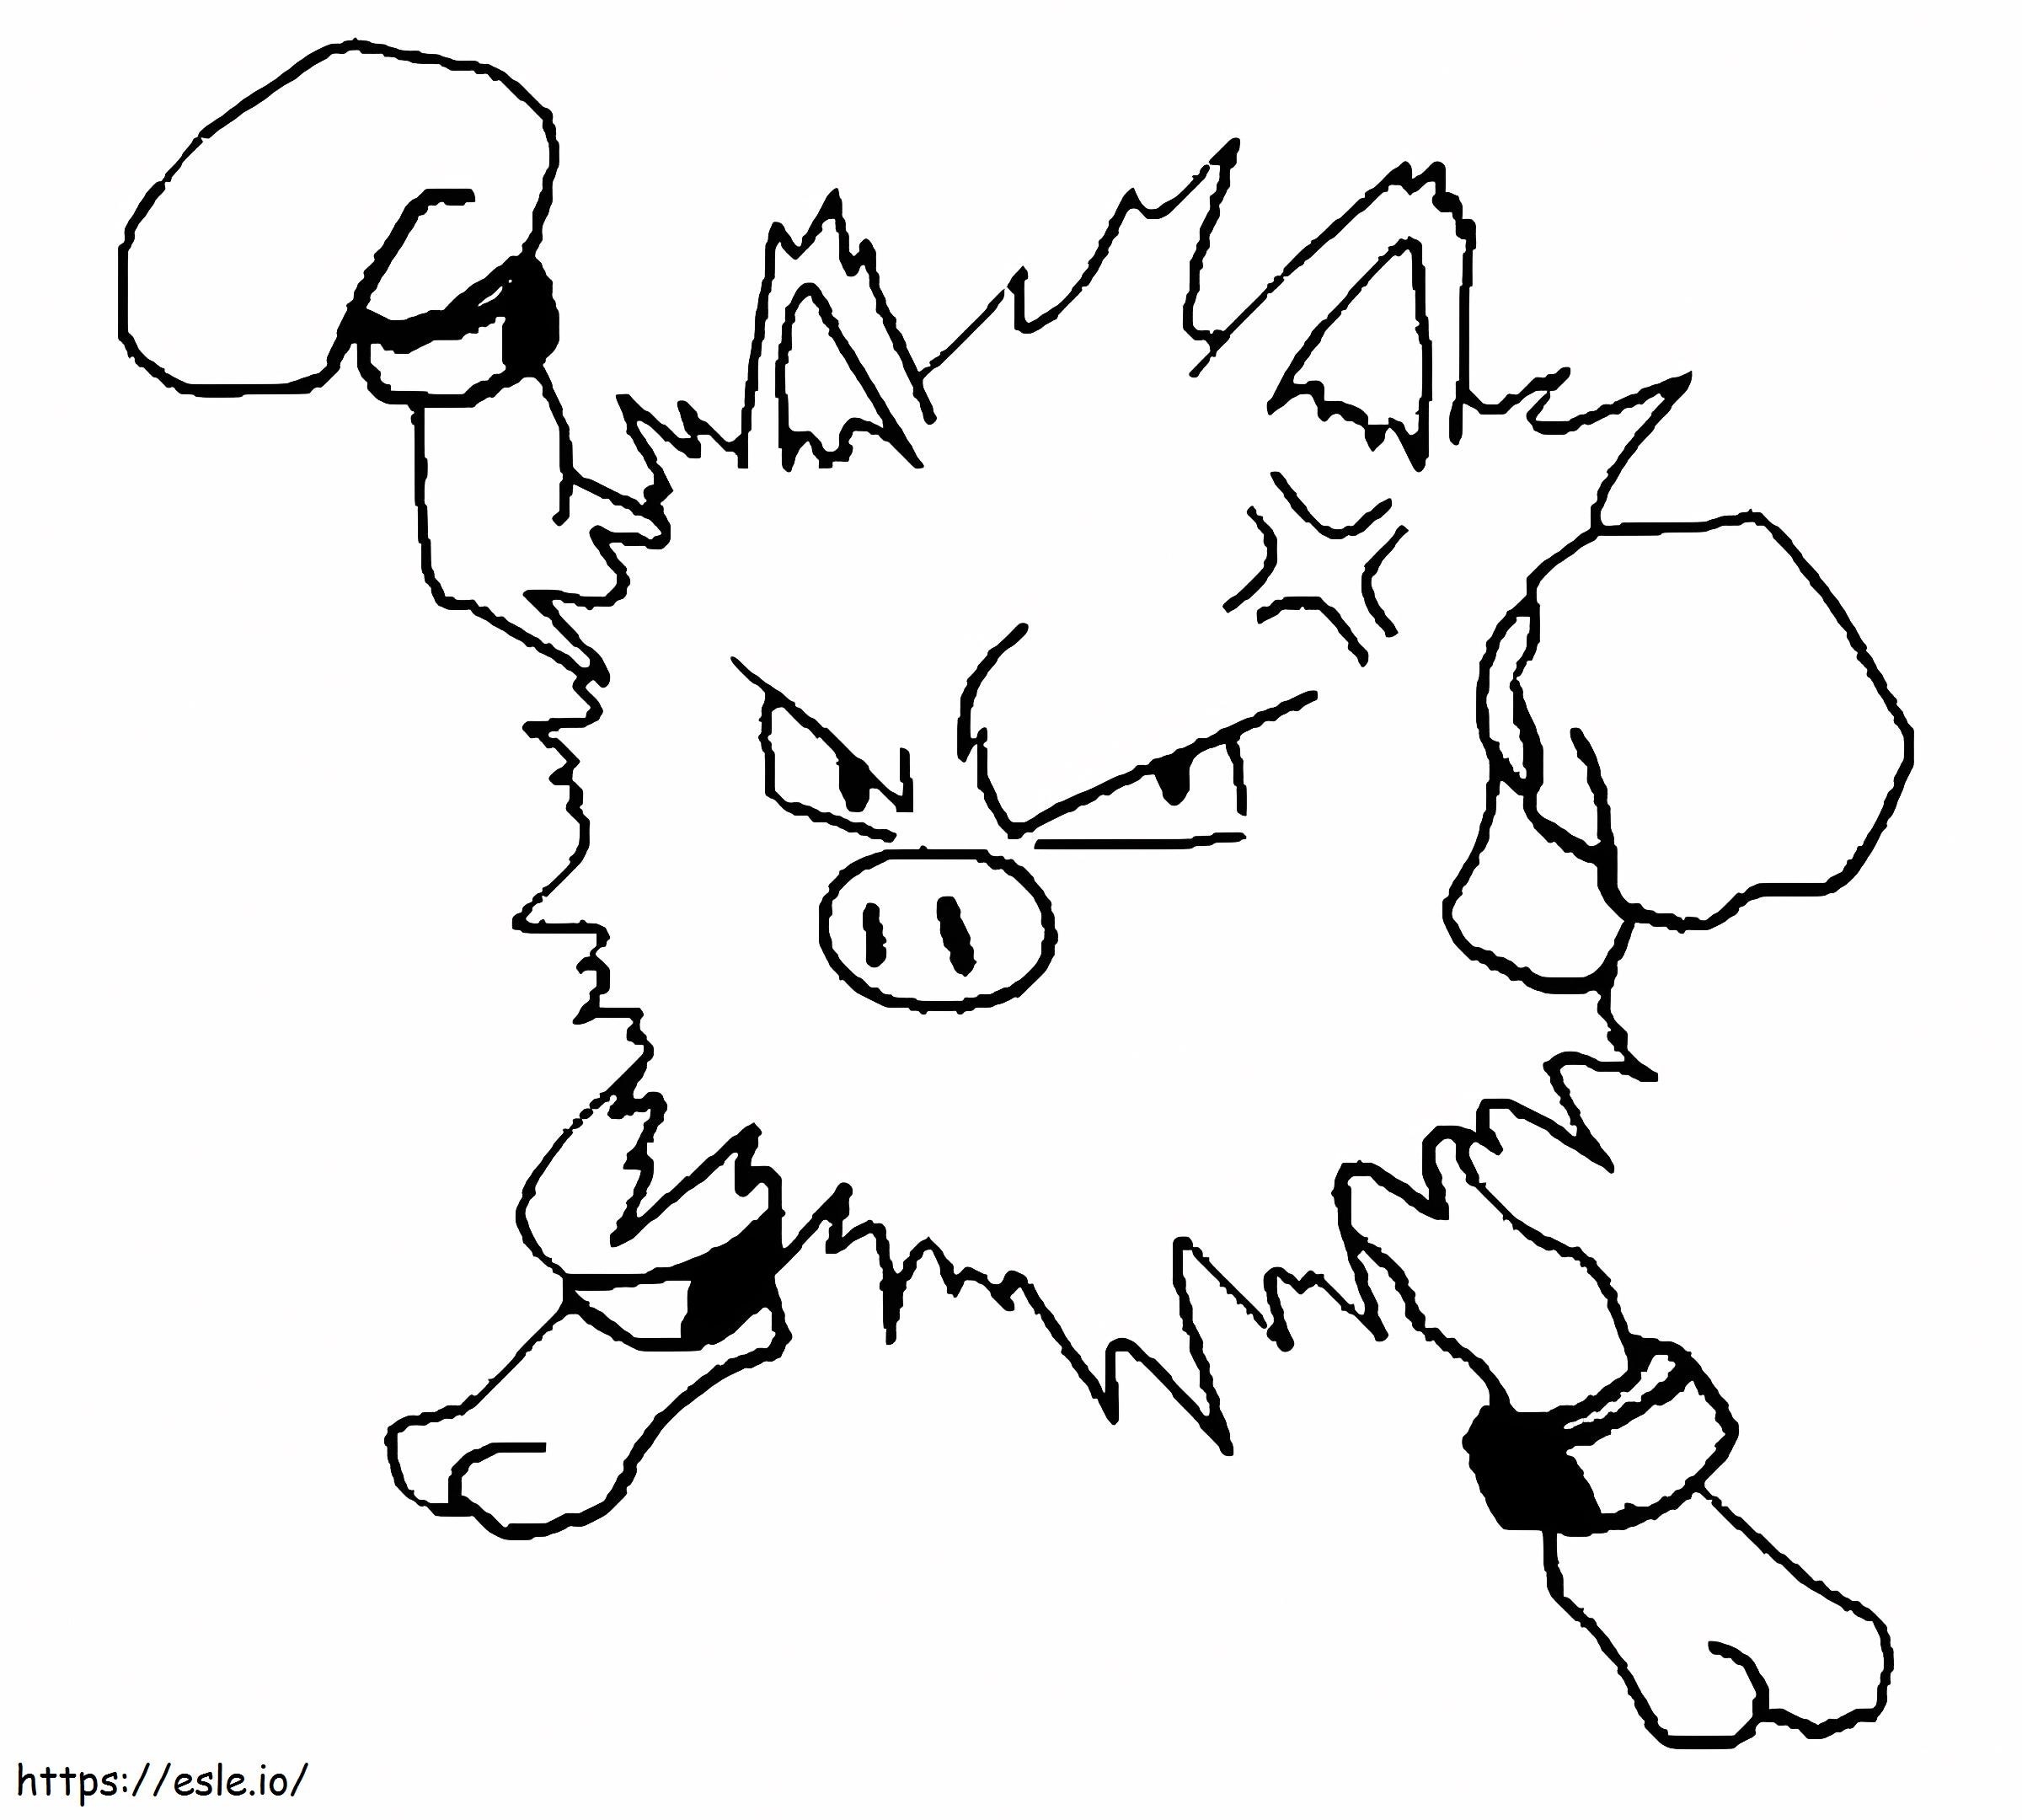 Desenhos de Pokemon Mankey - Como desenhar Pokemon Mankey passo a